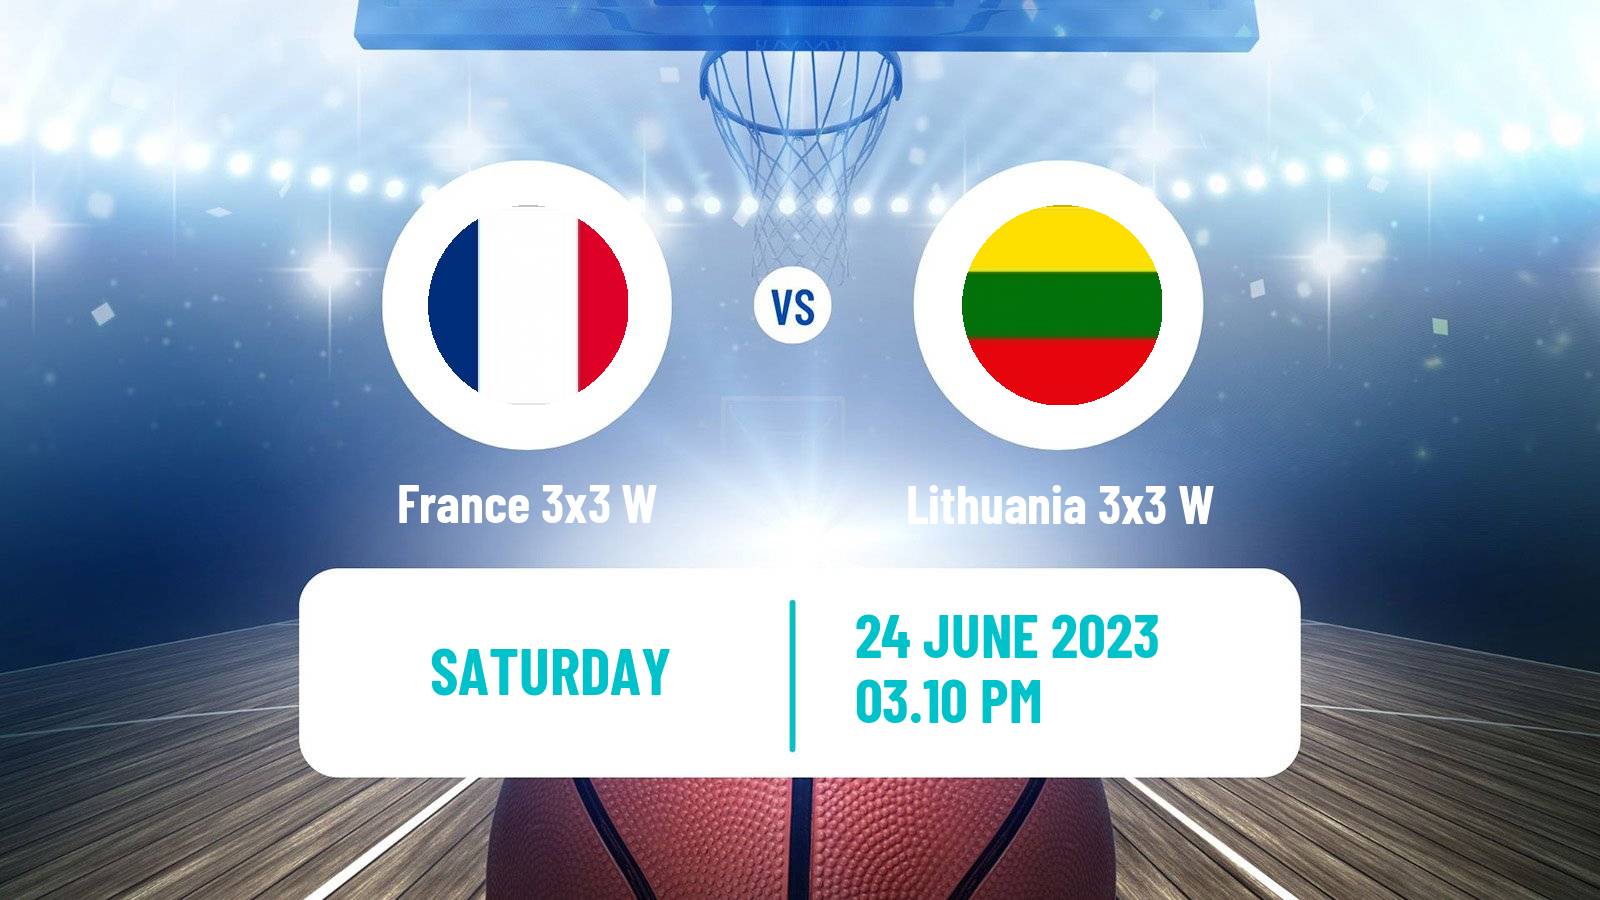 Basketball European Games 3x3 Women France 3x3 W - Lithuania 3x3 W